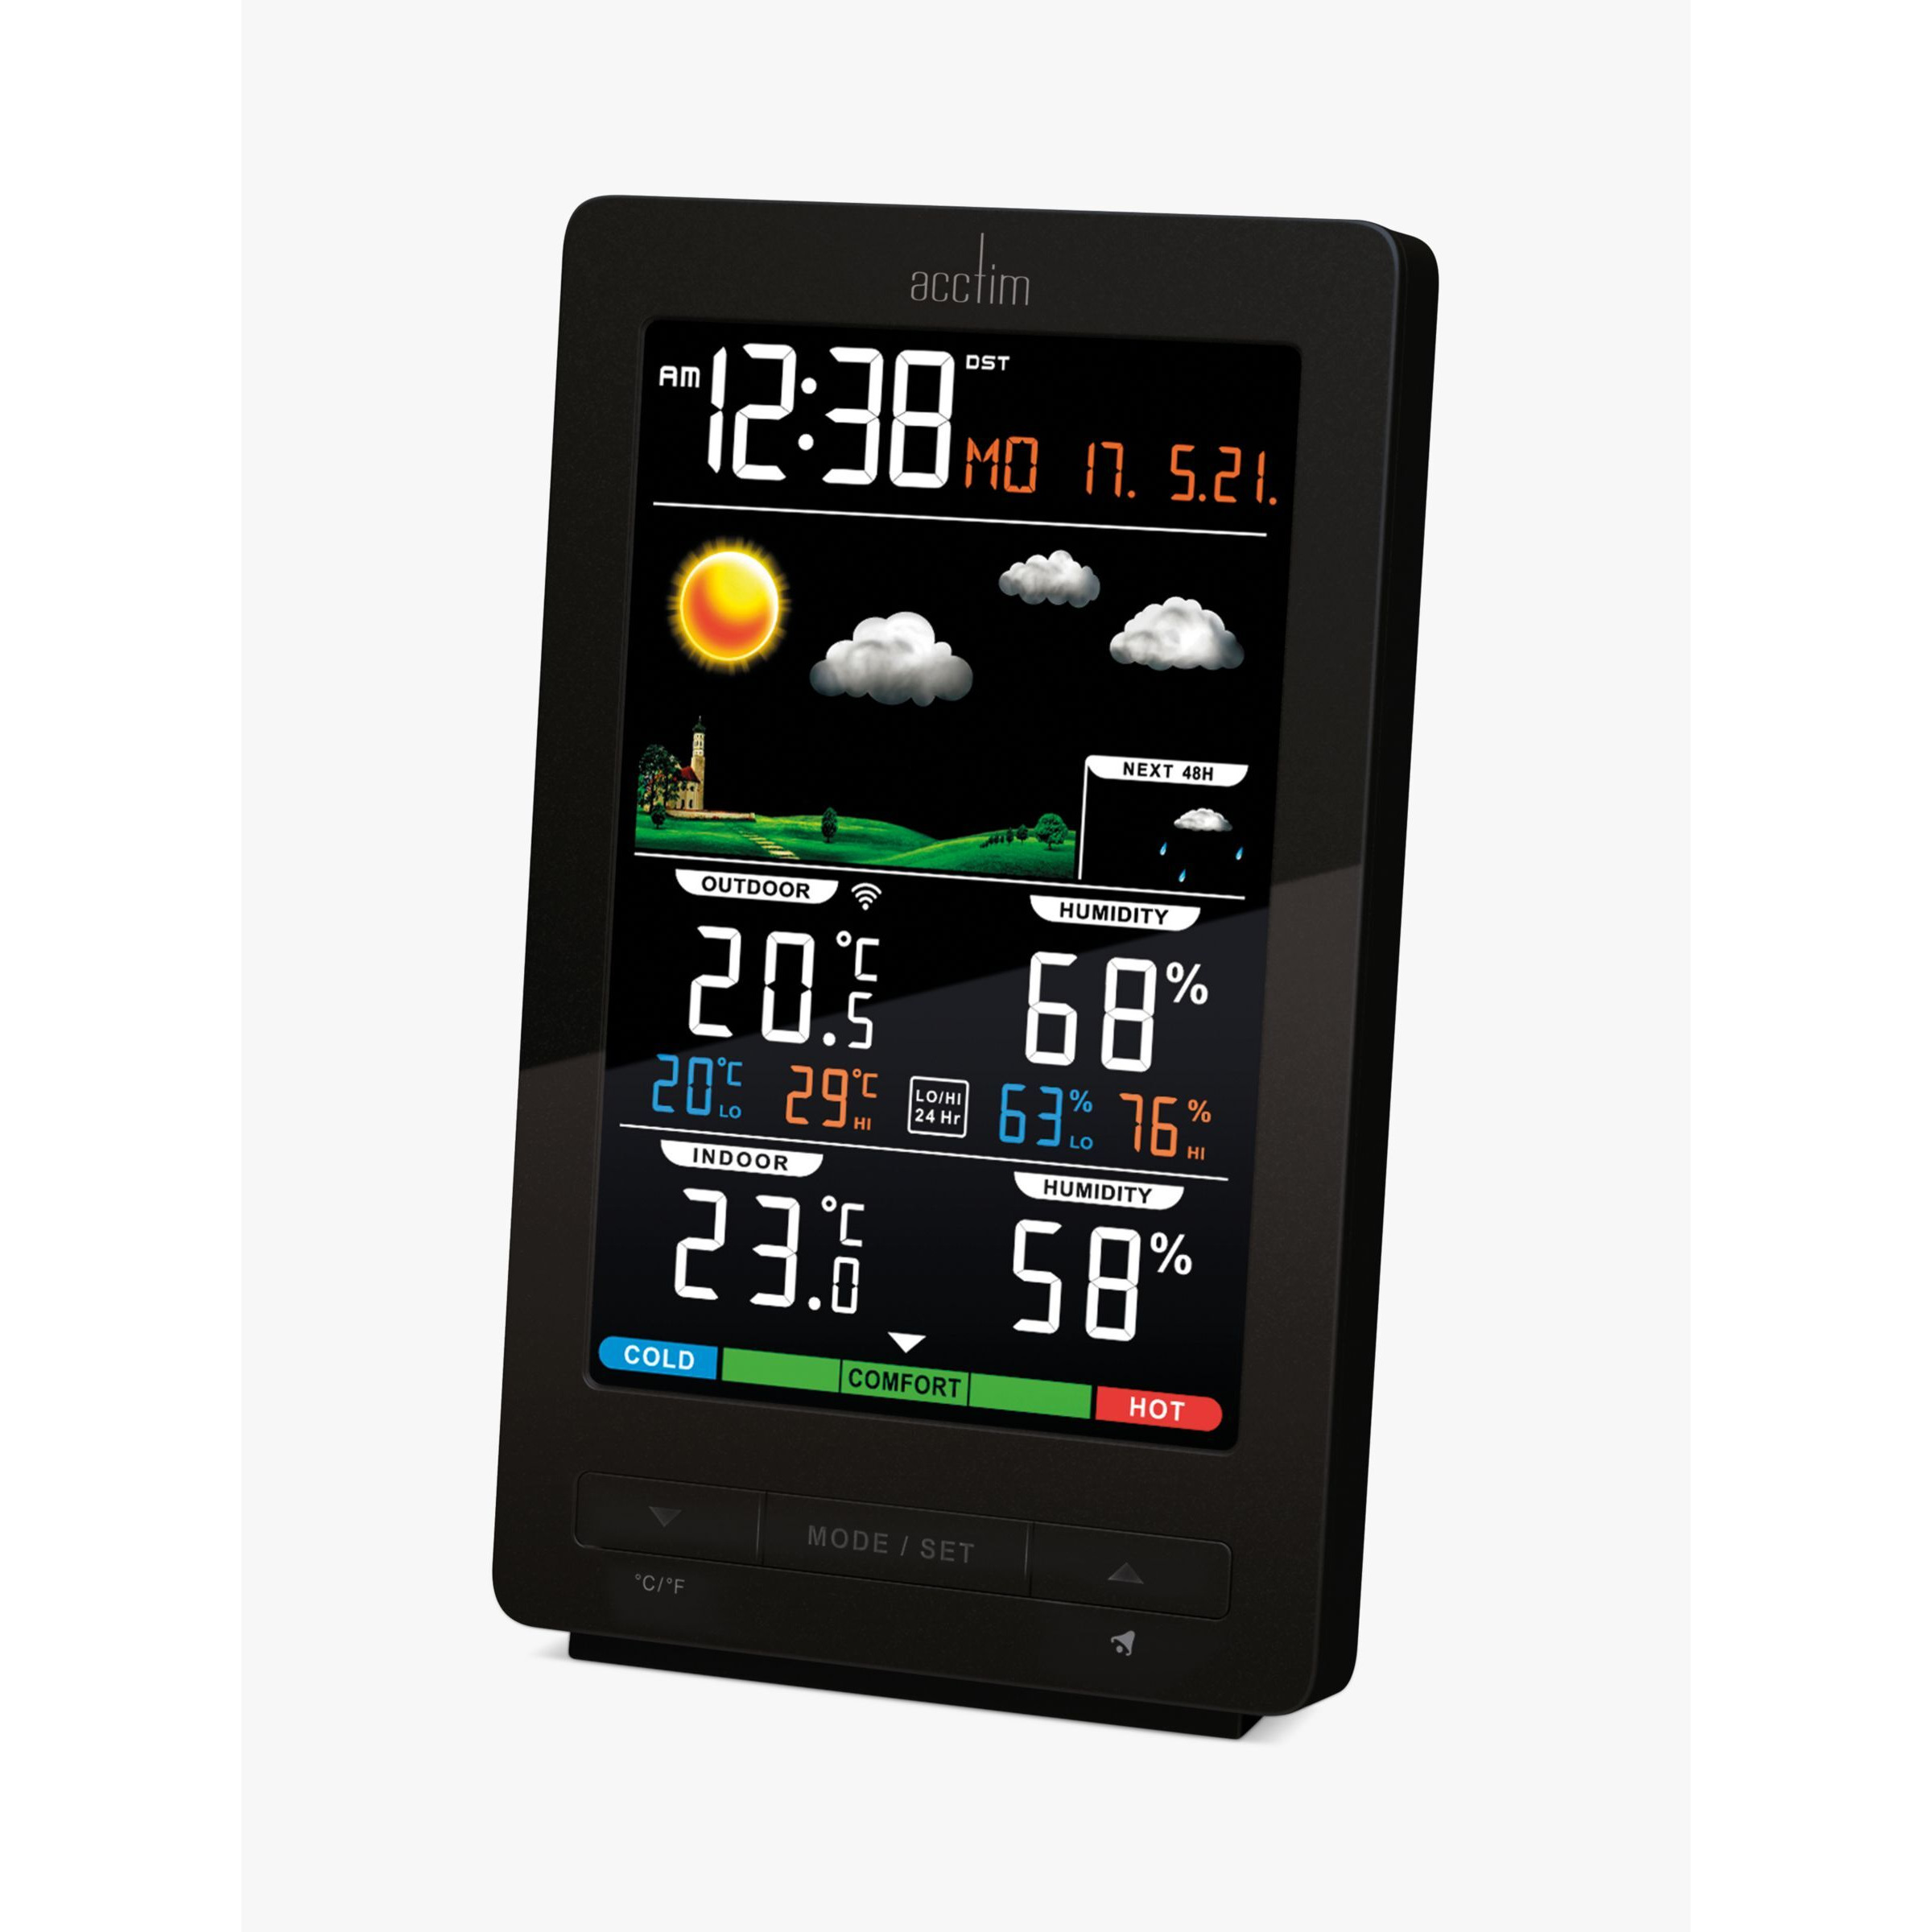 Acctim Ermir LCD Digital Weather Station Clock, Grey - image 1